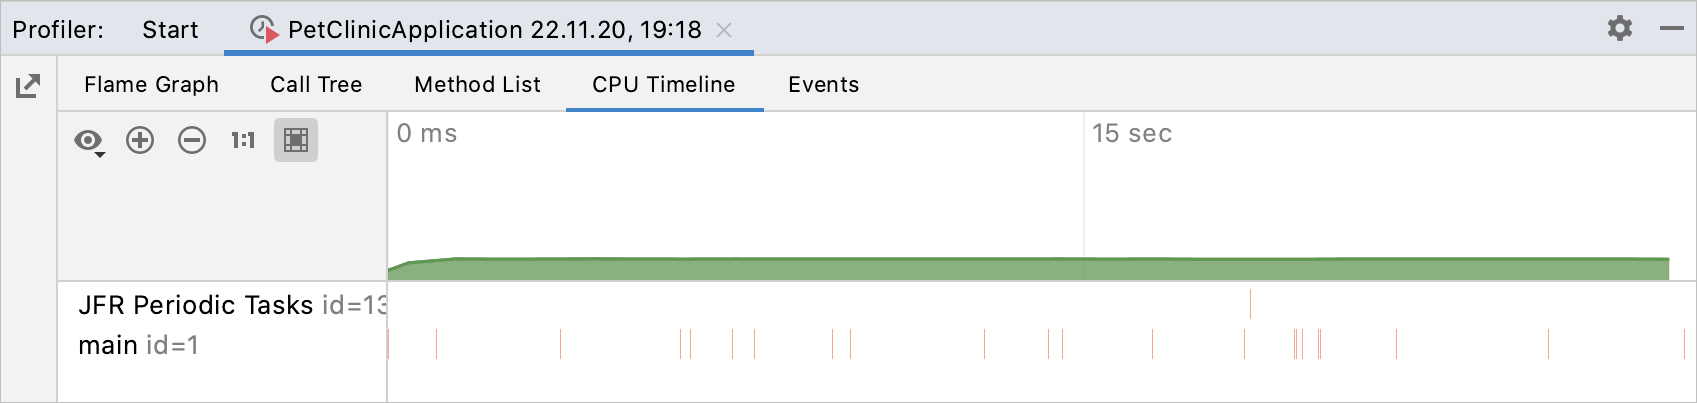 CPU timeline in the Profiler tool window